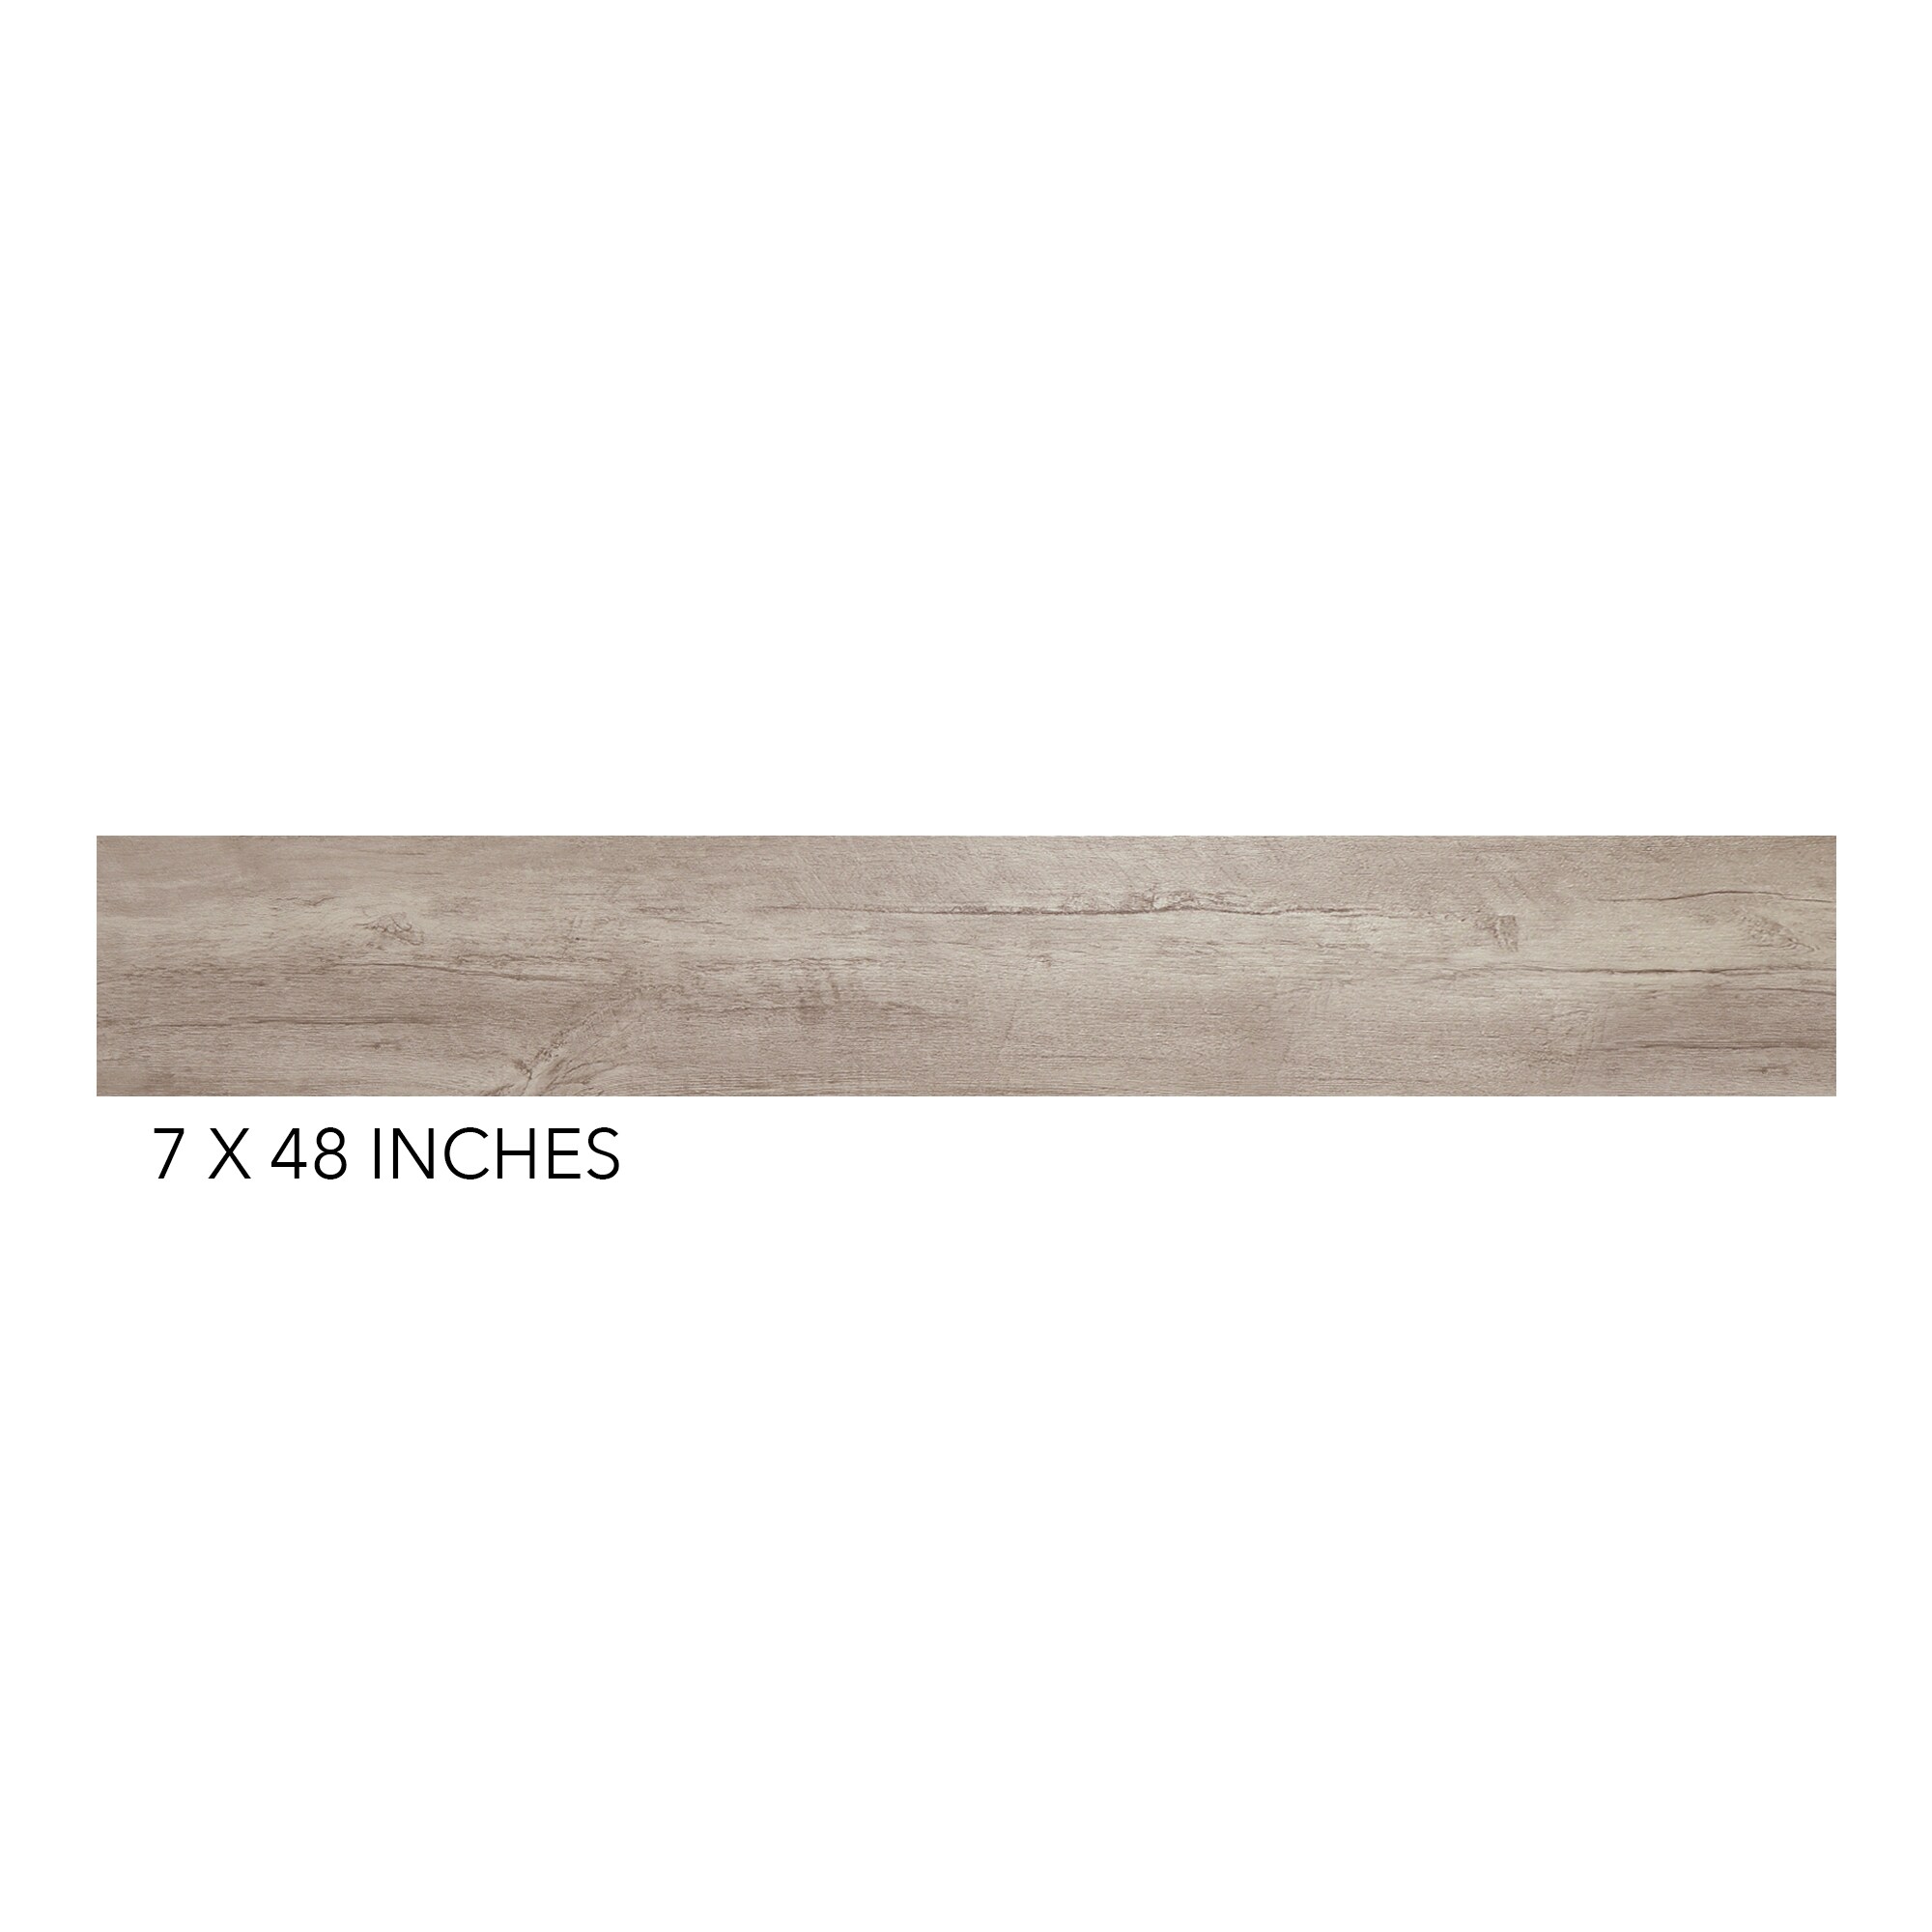 Mohawk 7.75x52 Waterproof Vinyl Plank Flooring in Warm Golden